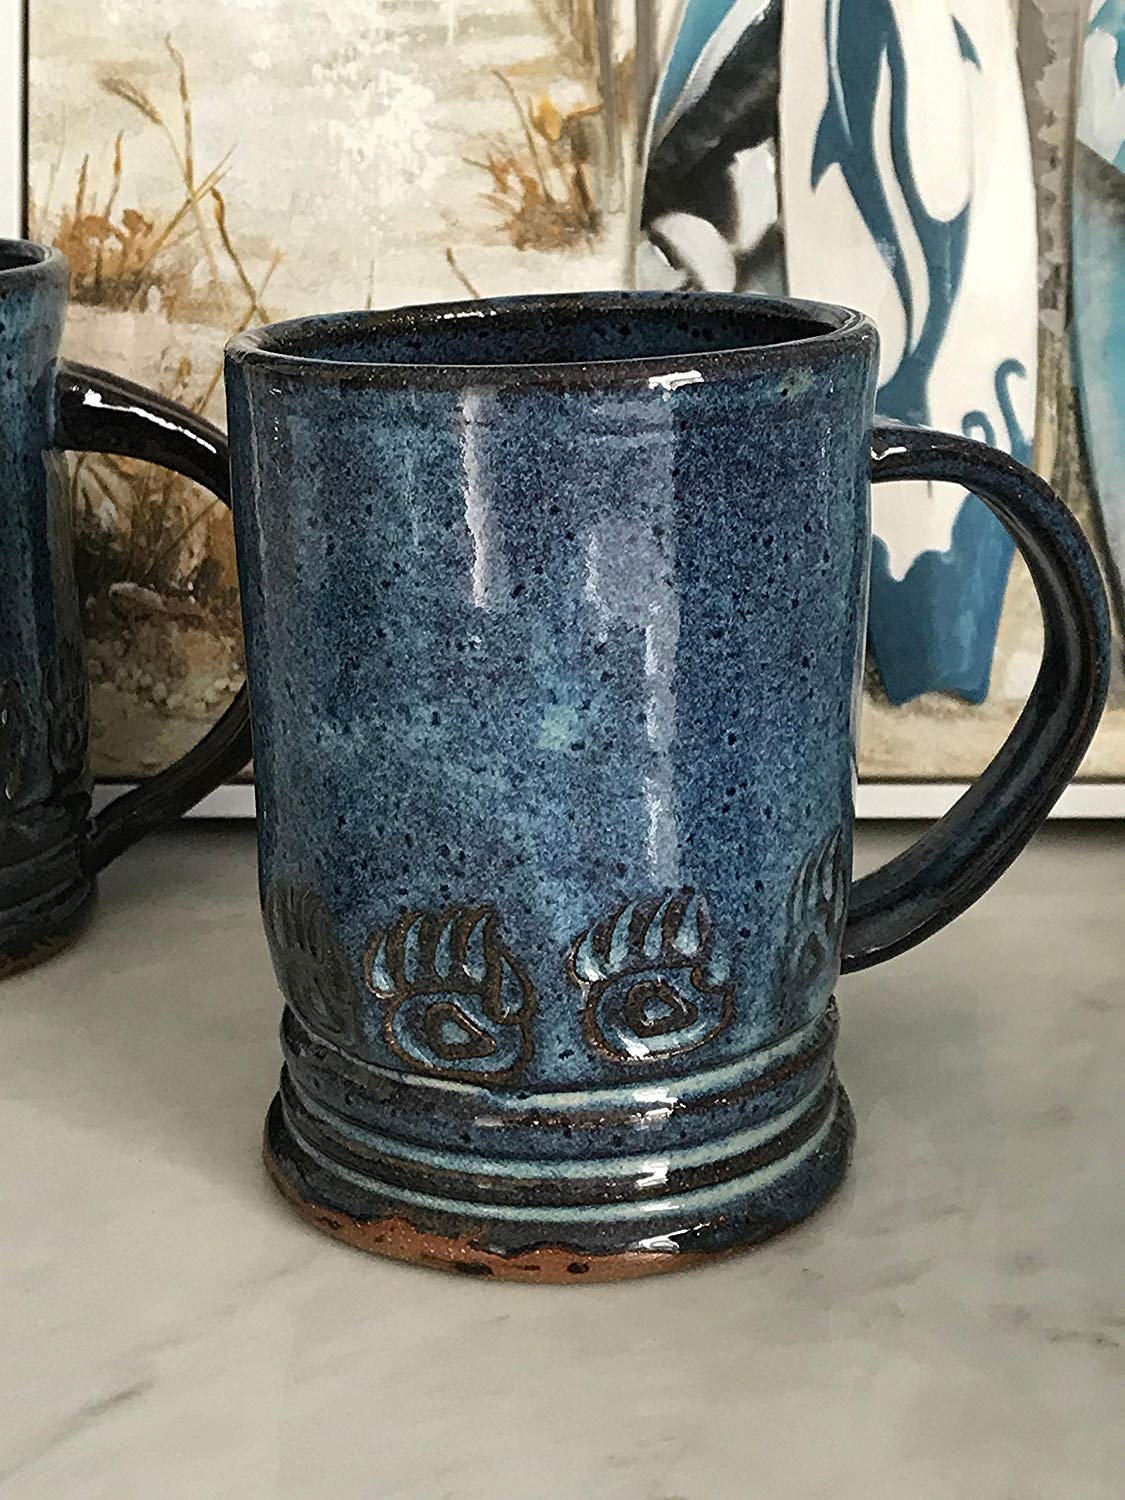 Blue Bear Paw Logo - Amazon.com: Blue Bear Paw Ceramic Mug 14 oz Large Handle Handmade ...